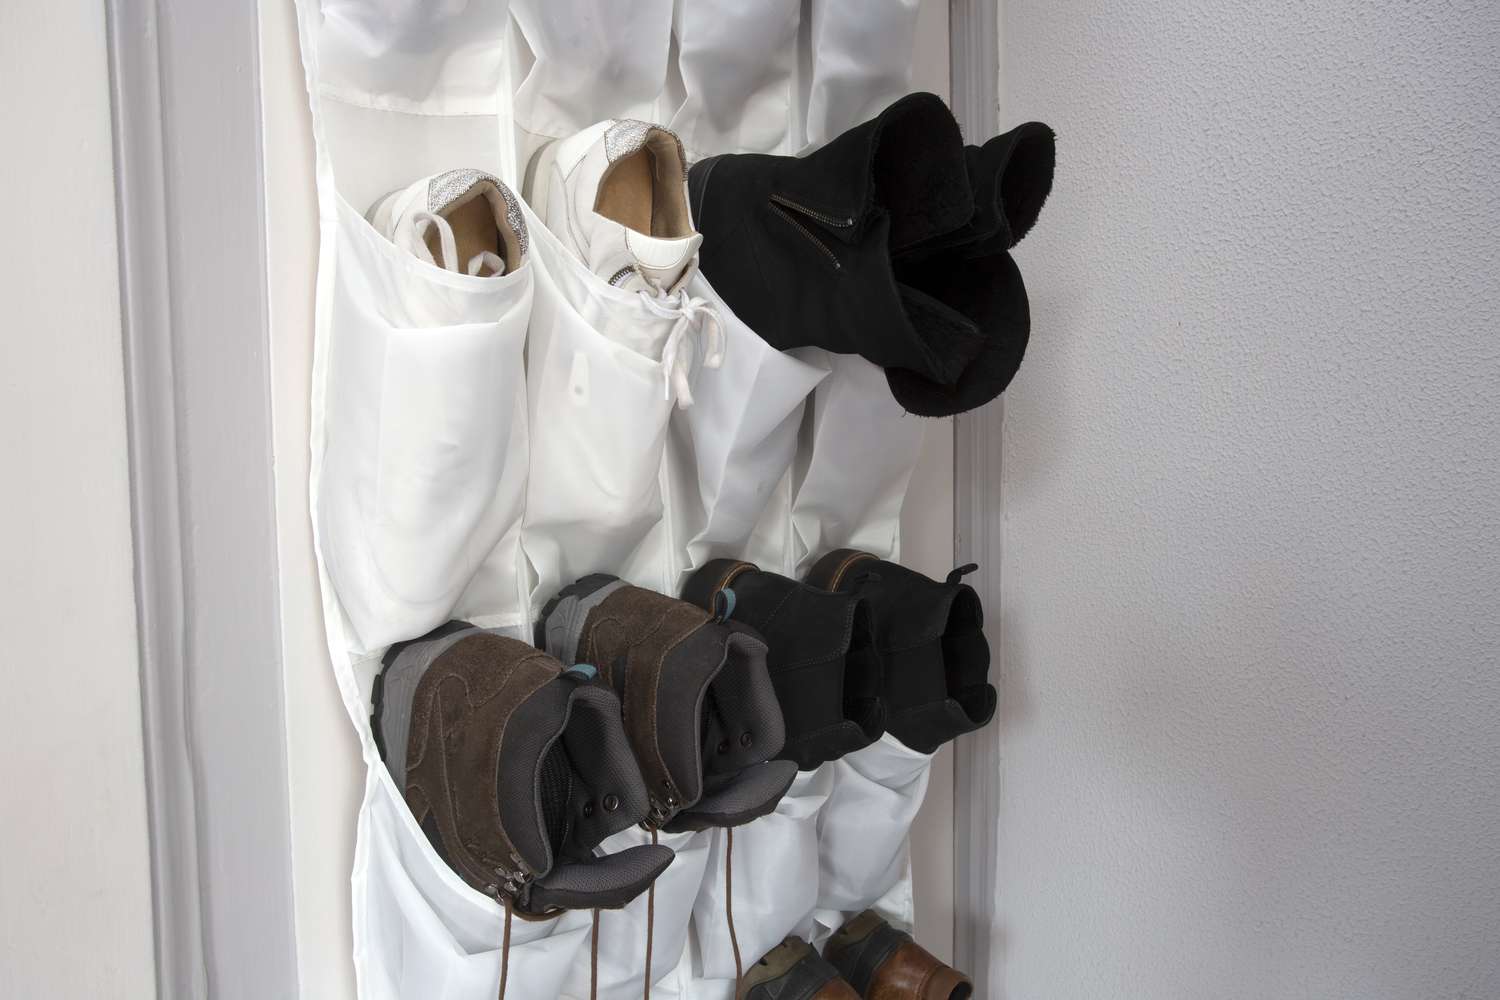 Shoes stored in an over the door rack